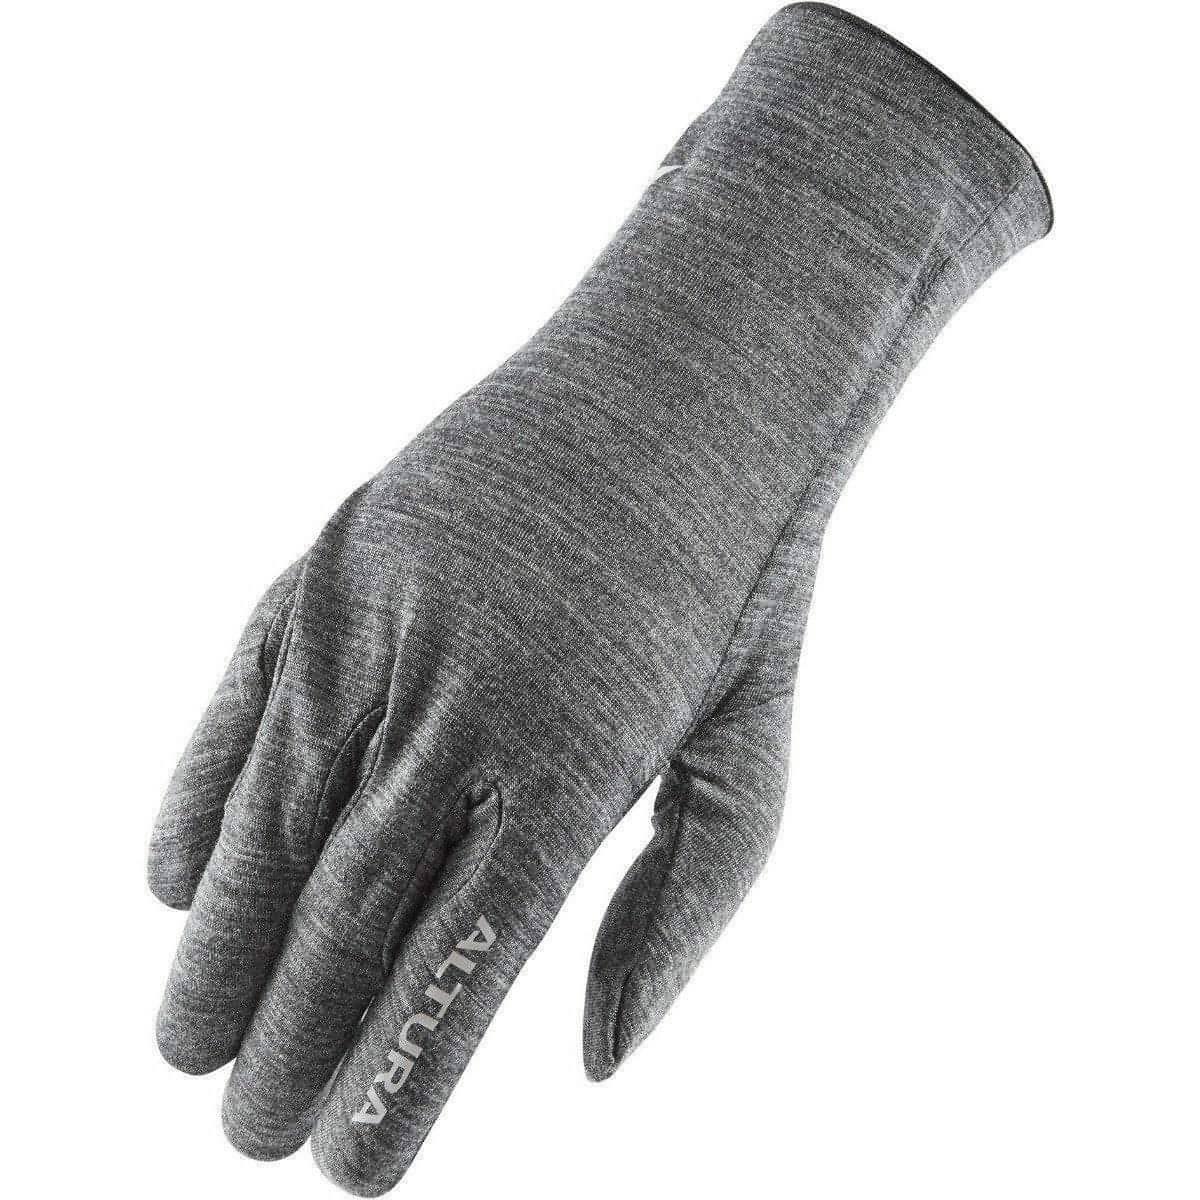 Altura Merino Liner Full Finger Cycling Gloves - Grey 5034948142589 - Start Fitness